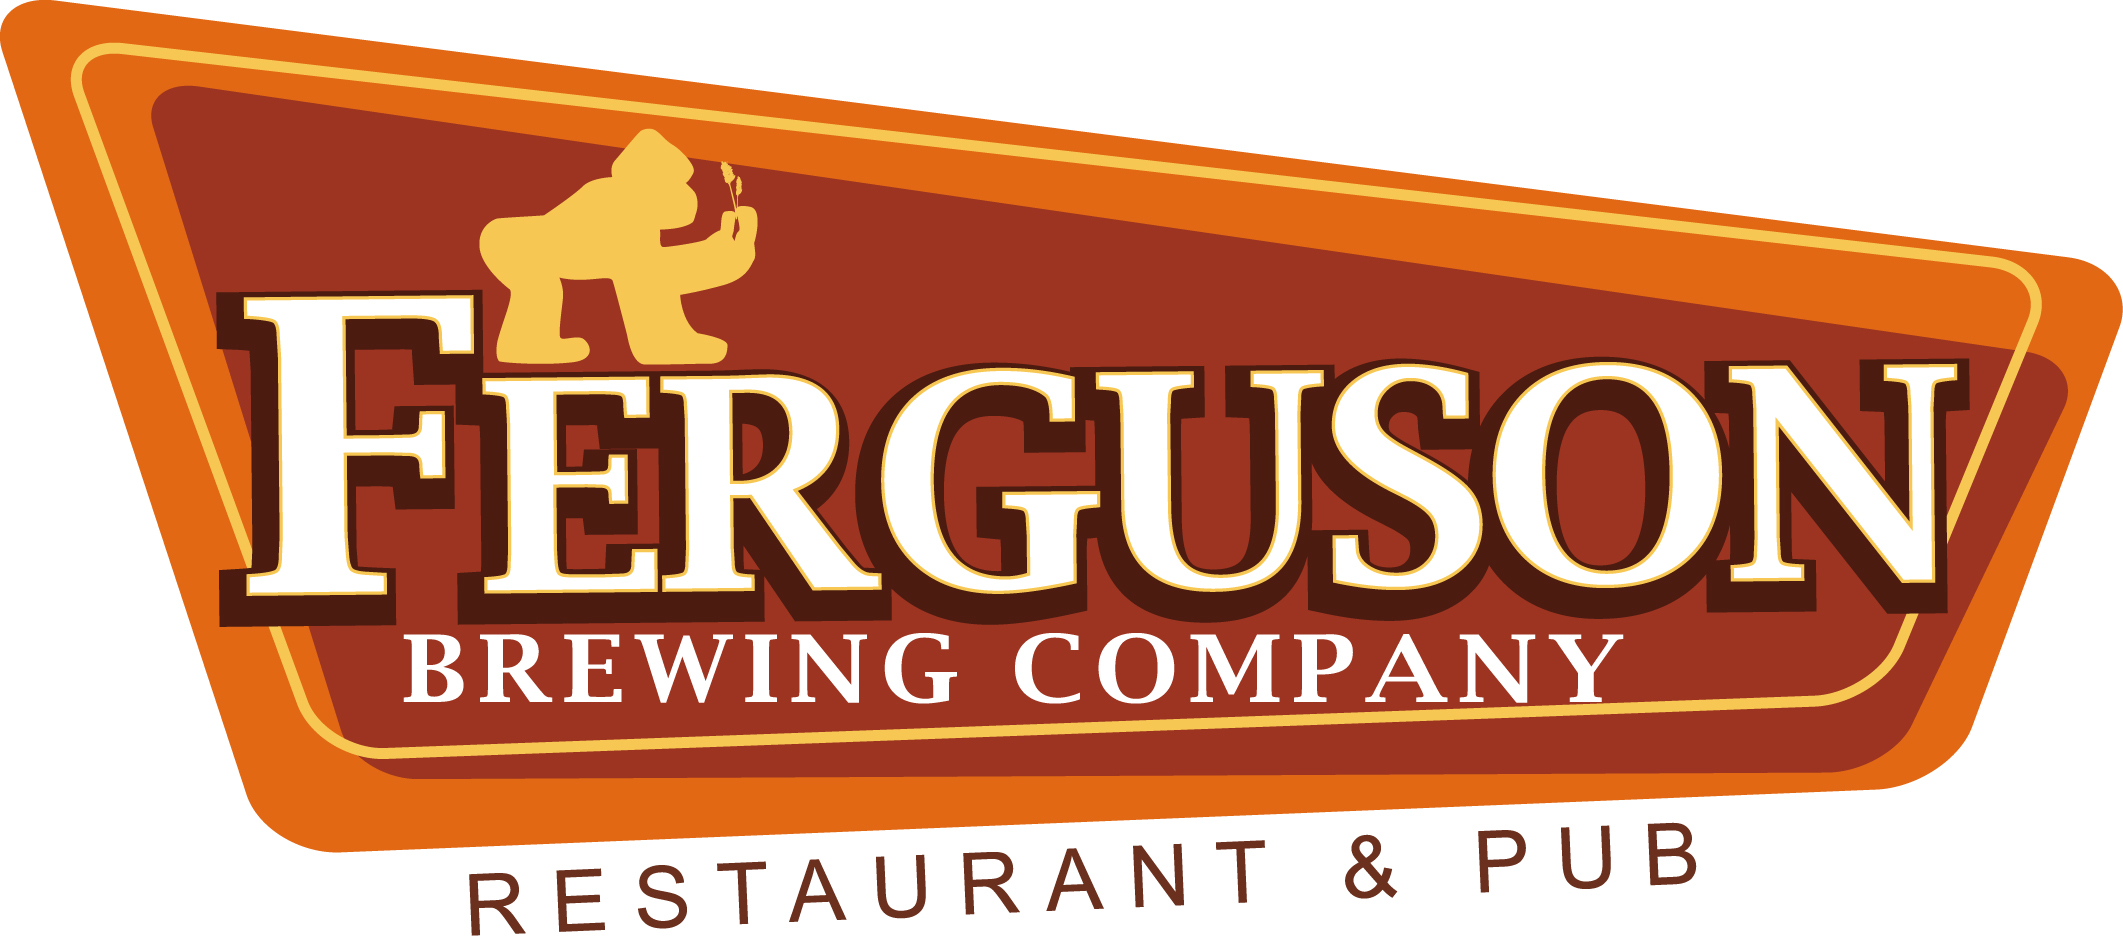 Ferguson Brewing Company